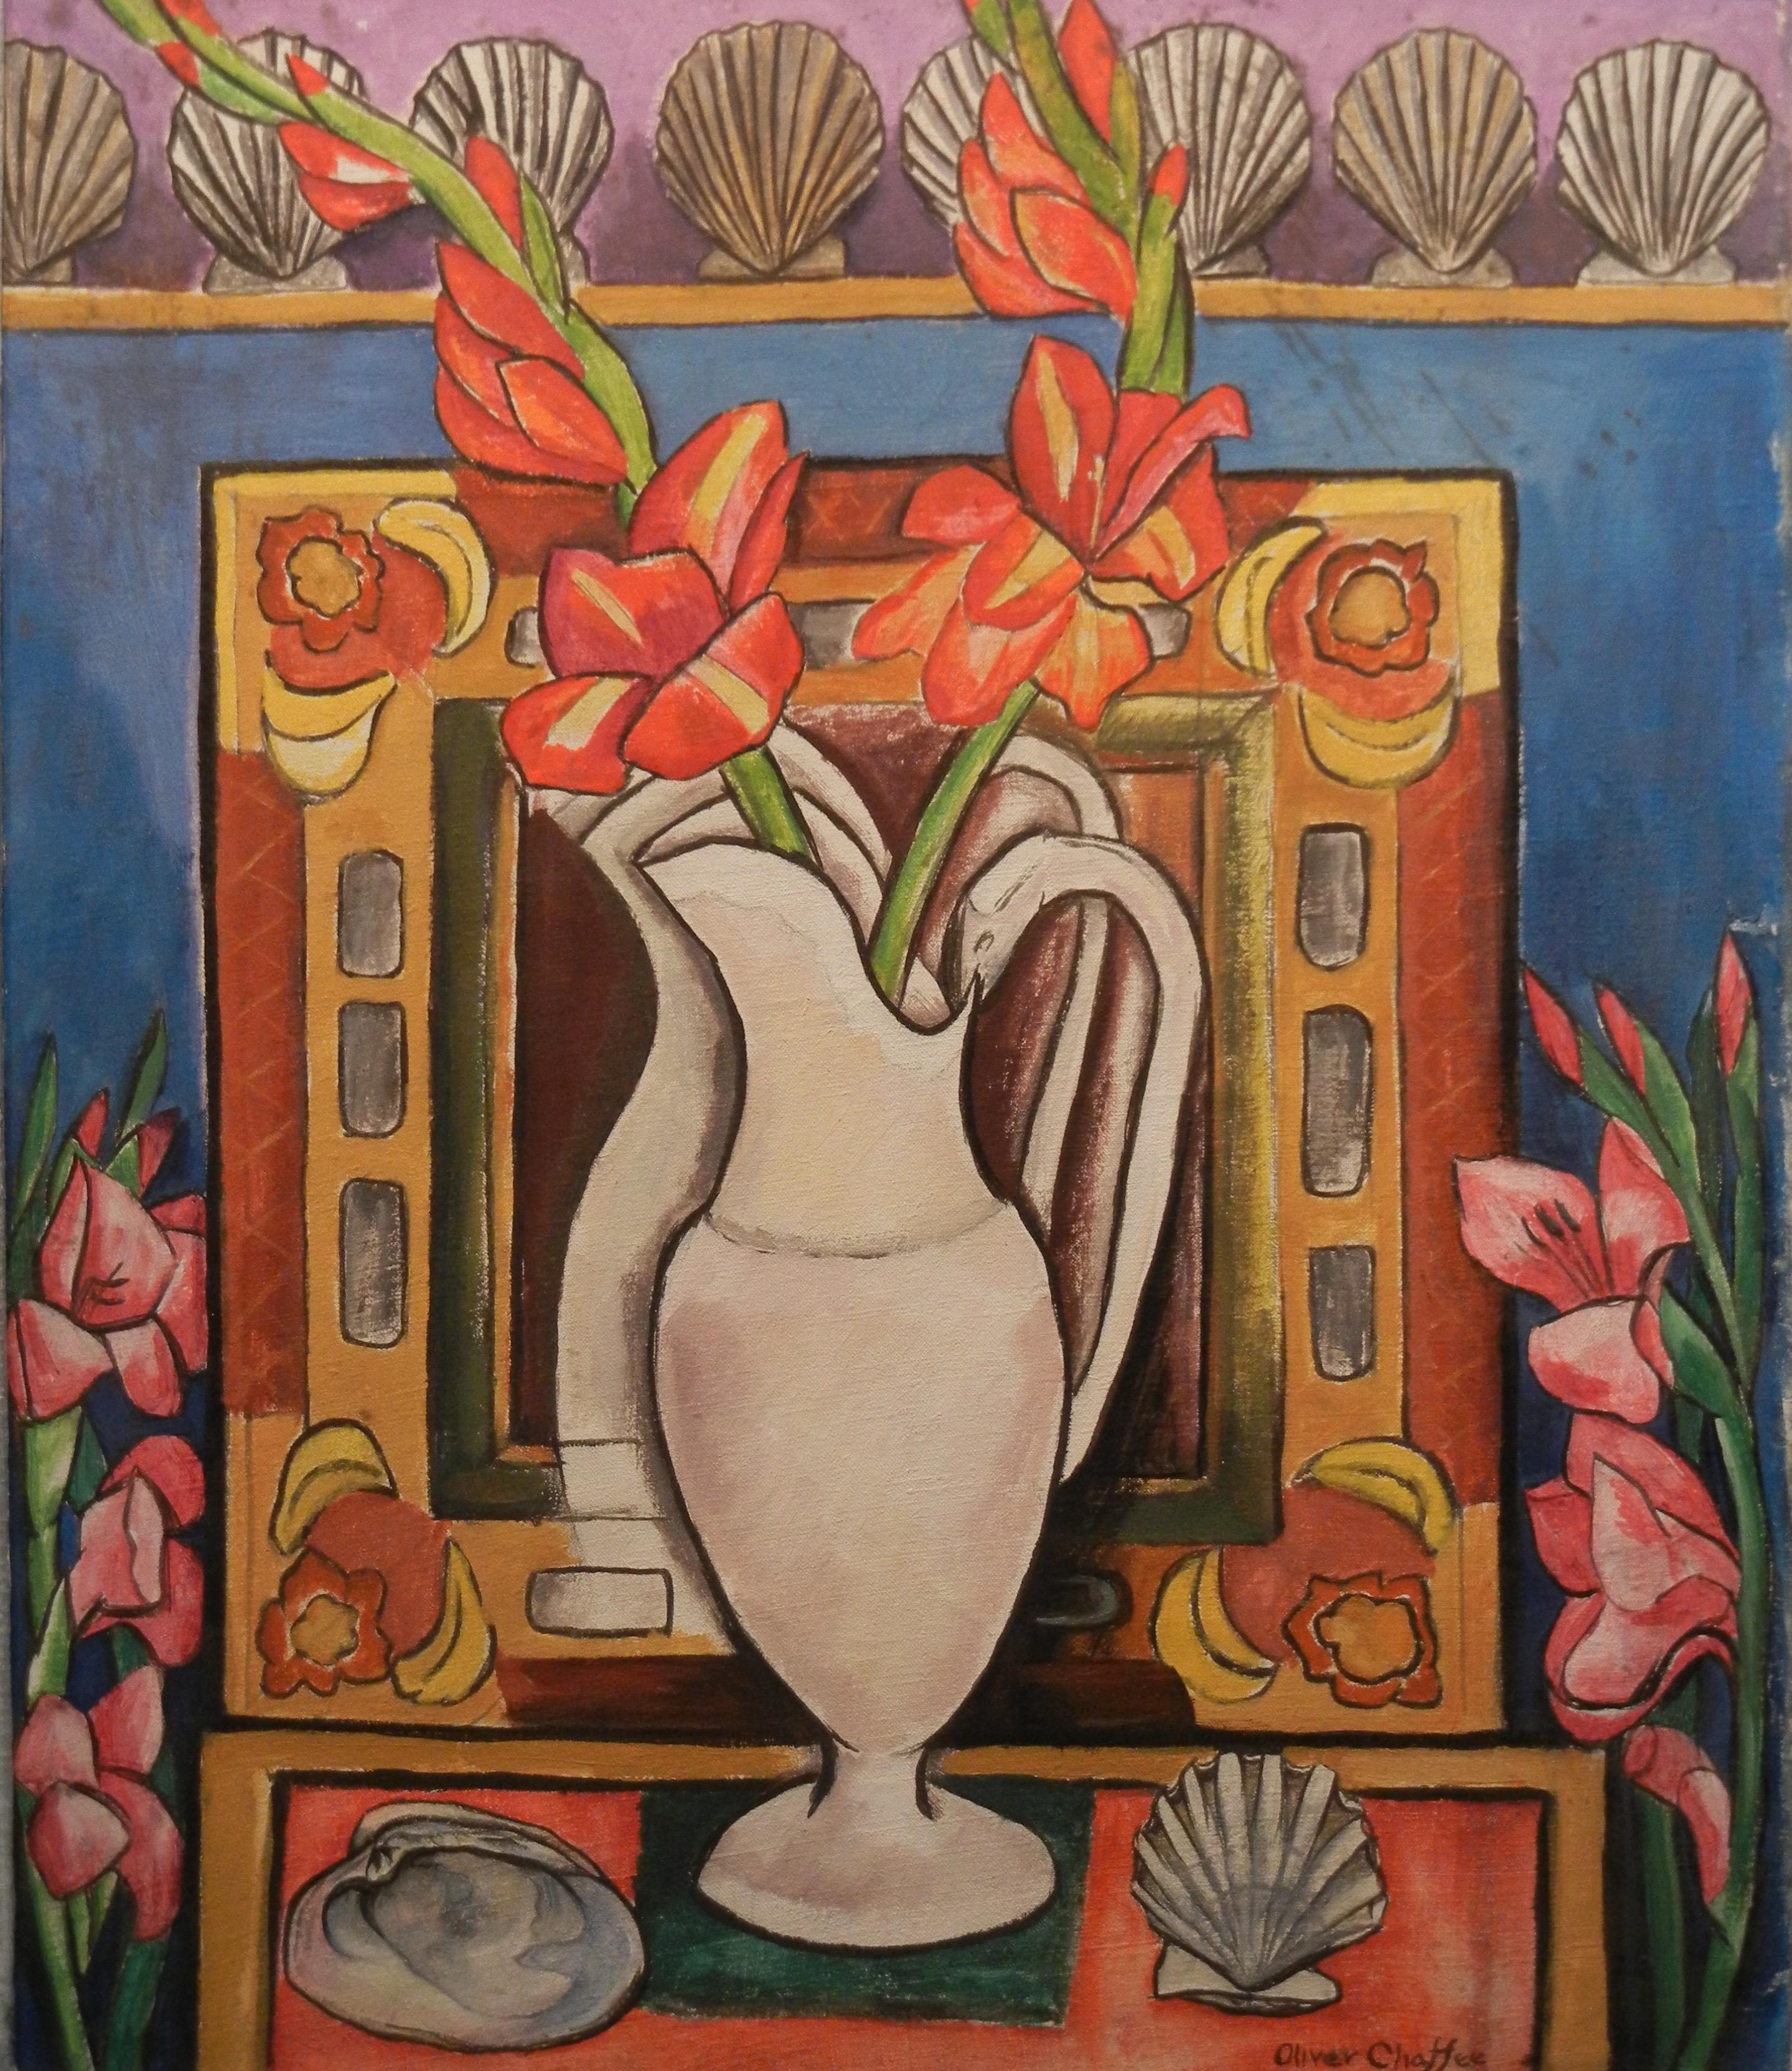 Coquillages et fleurs - Painting de Oliver Chaffee